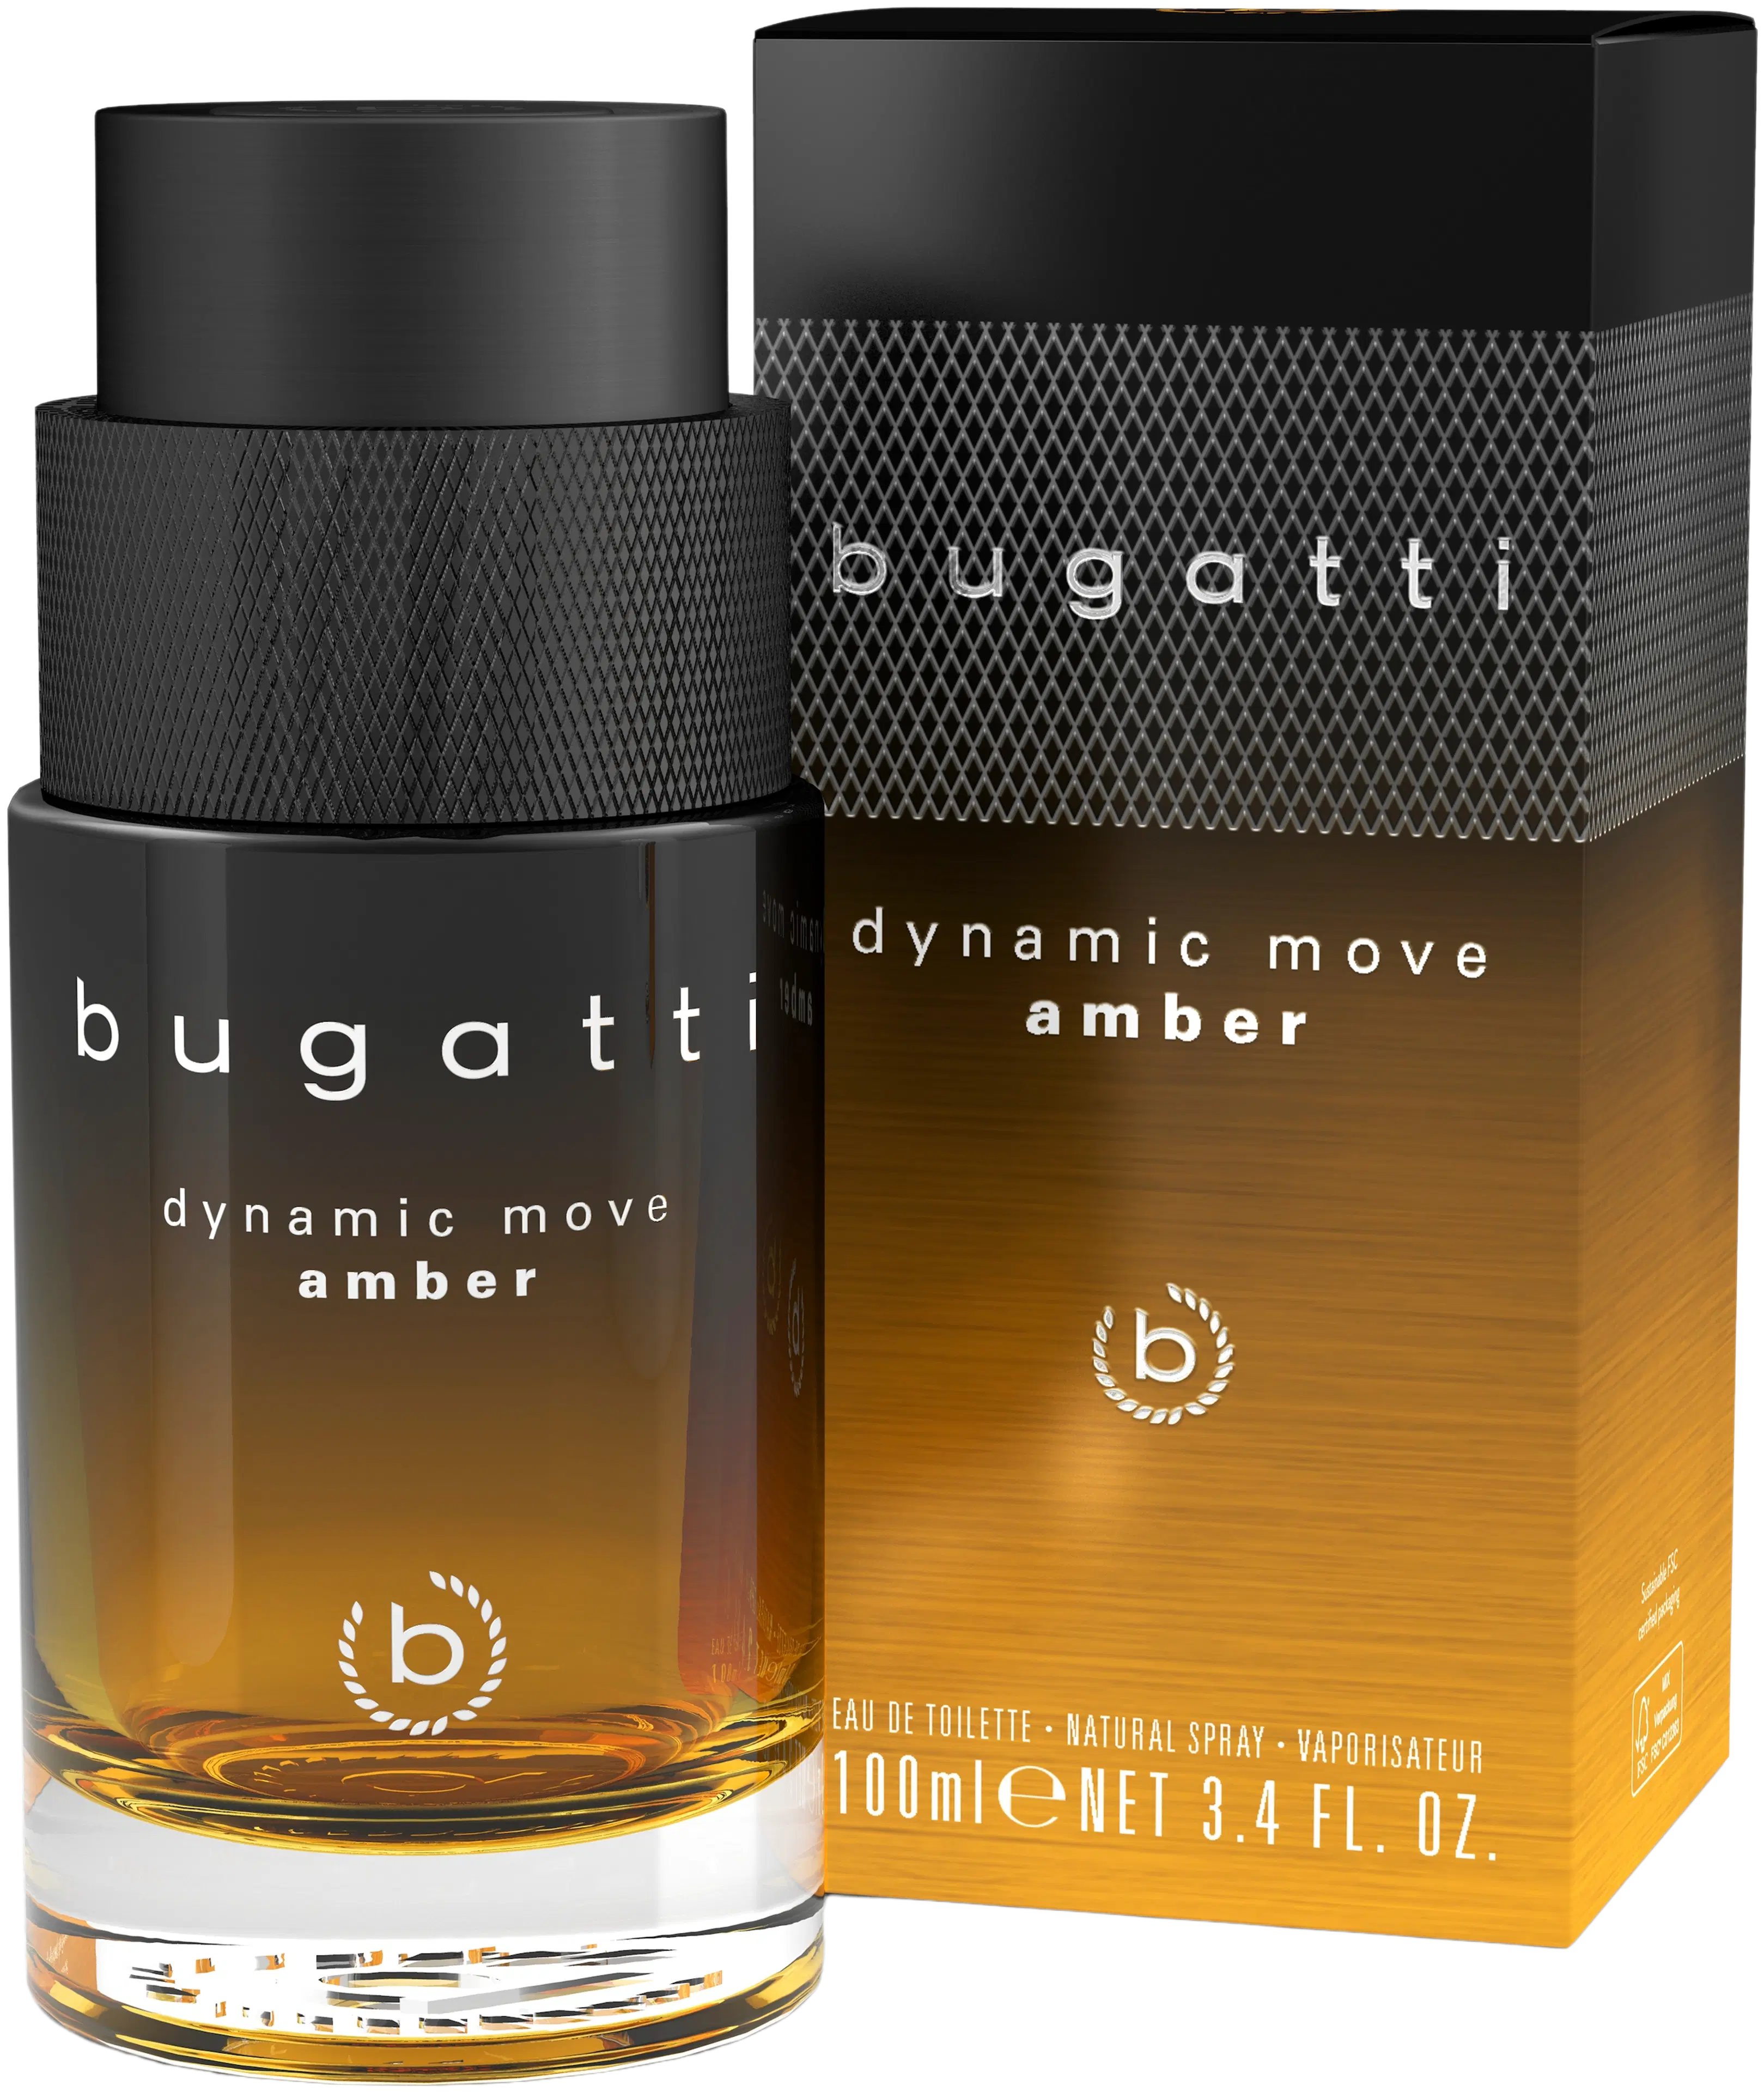 Bugatti Dynamic Move Amber EdT 100 ml